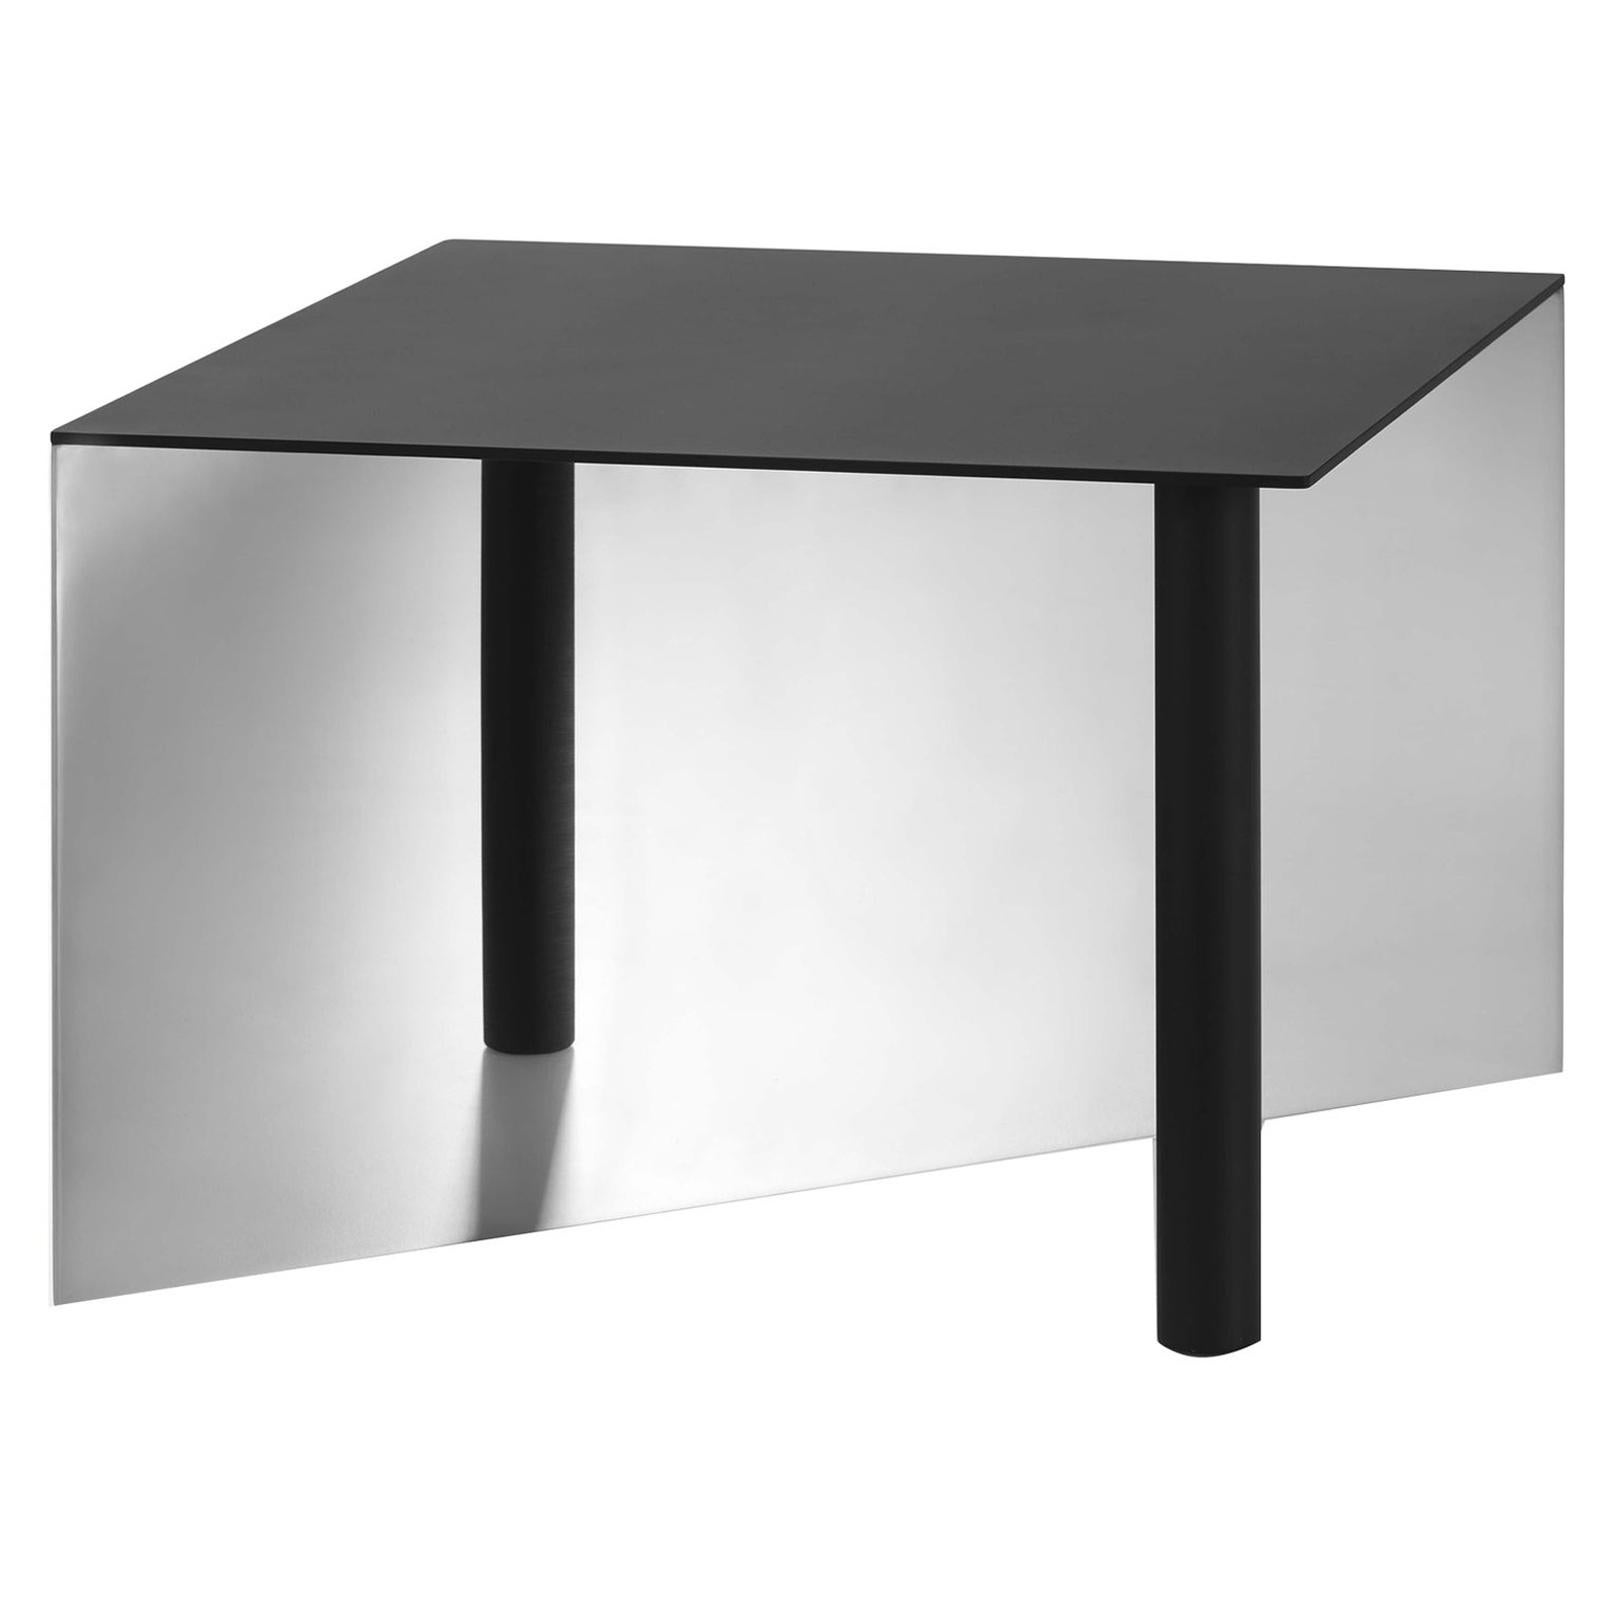 FUCINA "PIATTO" Sam Hecht & Kim Collin, Low Square Table Metal Steel Black For Sale